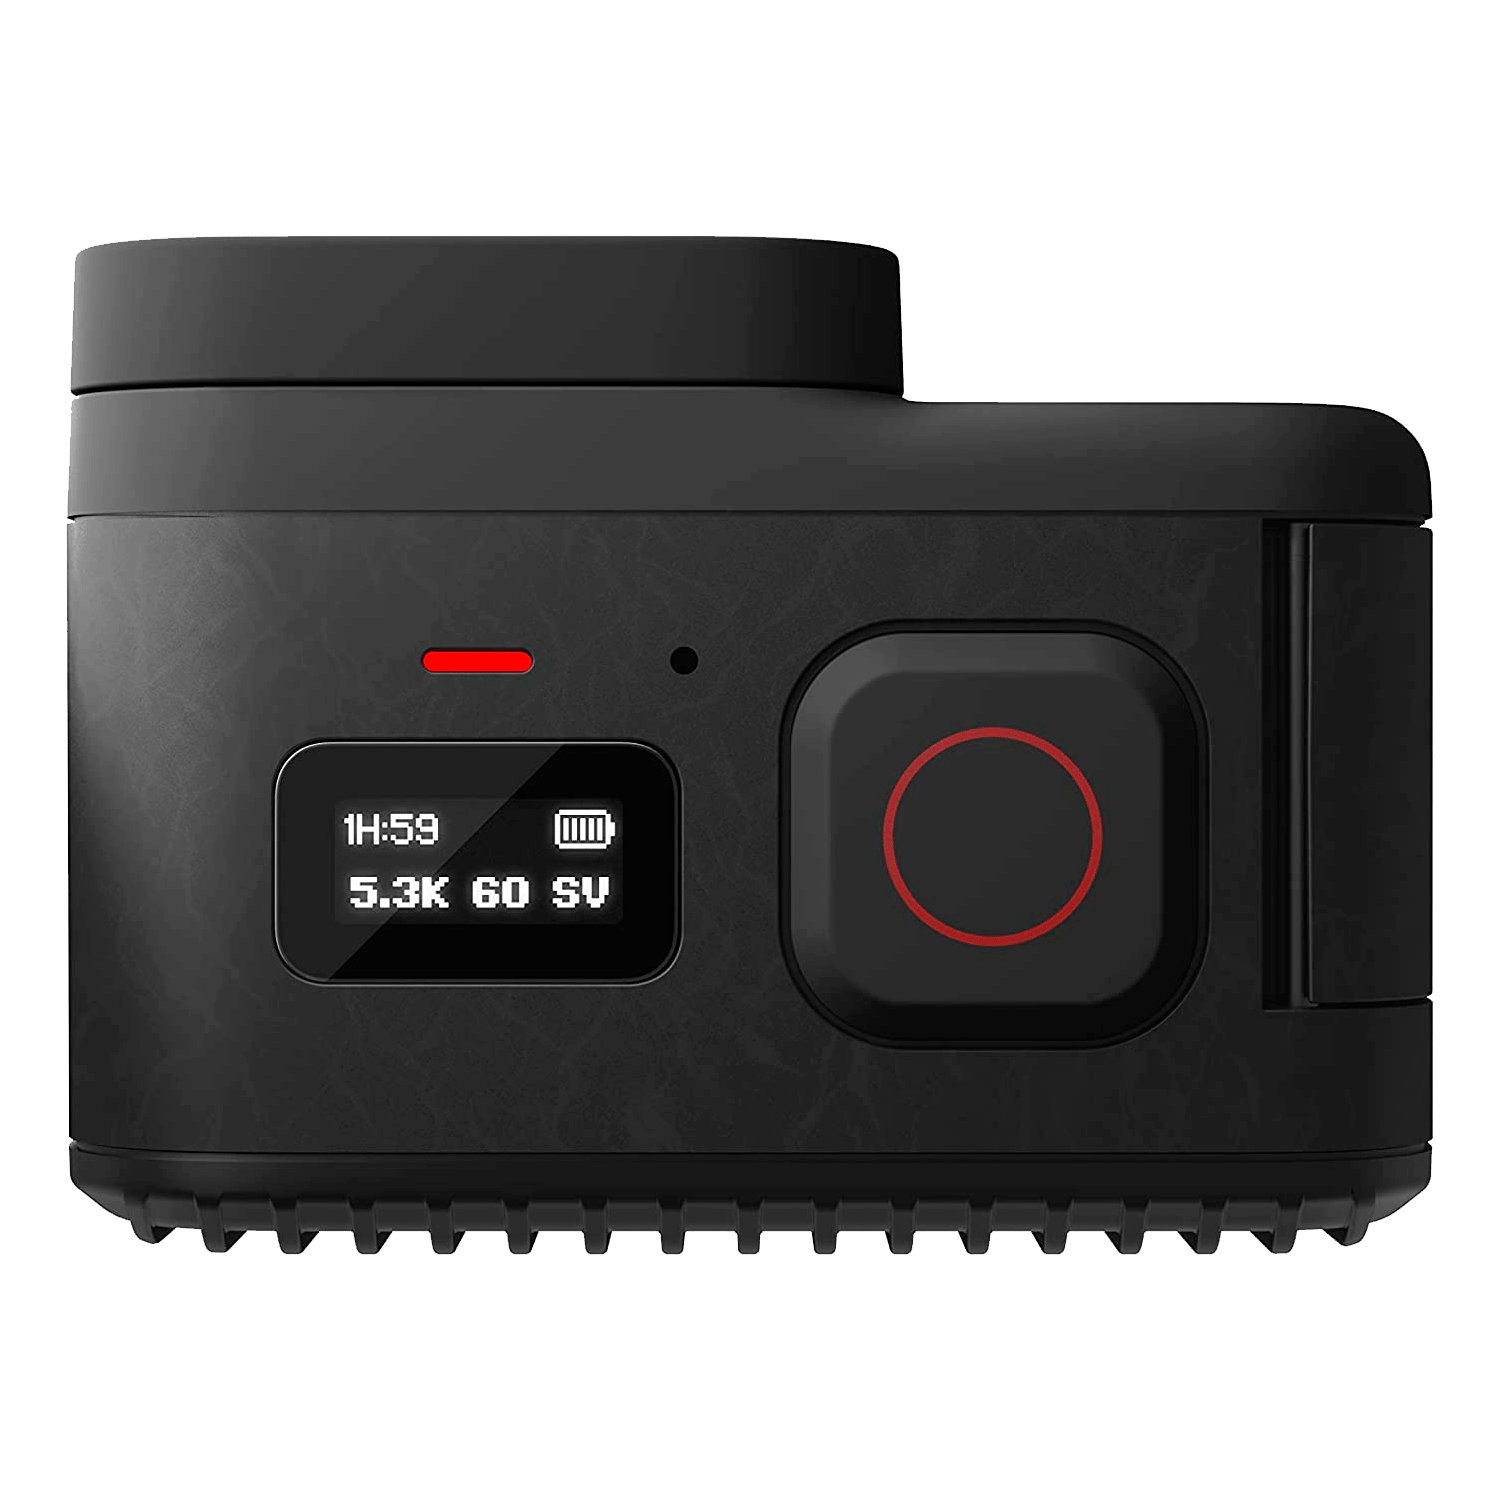 Câmera GoPro Hero 11 Black Mini 5.3K - (CHDHF-111-RW)(Sem visor)